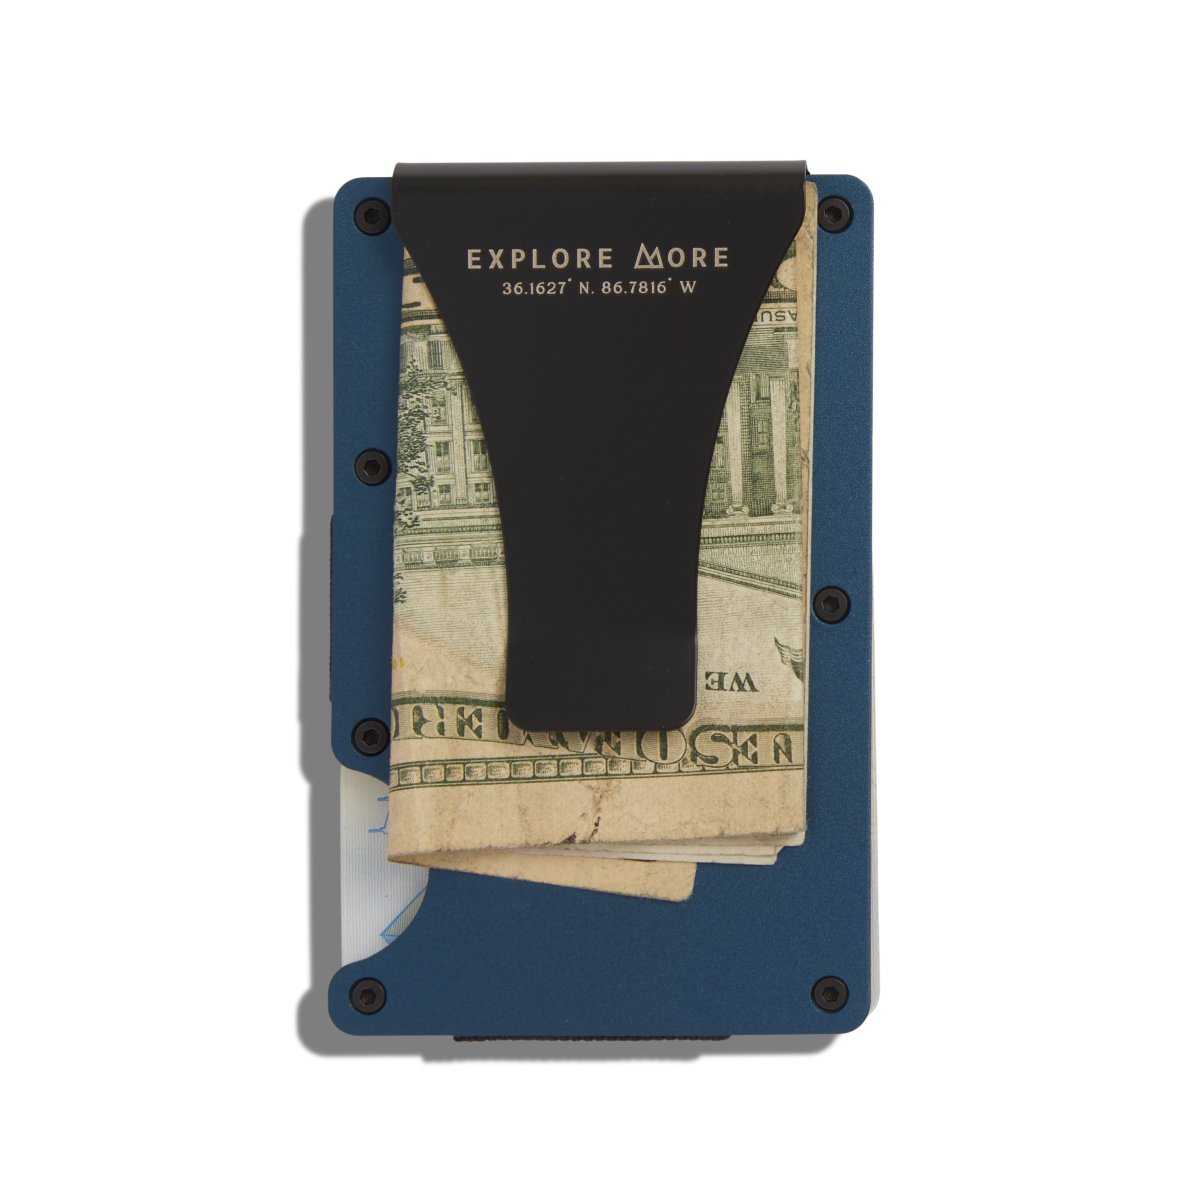 Navy RFID Adventure Wallet - Roosevelt Supply Co.